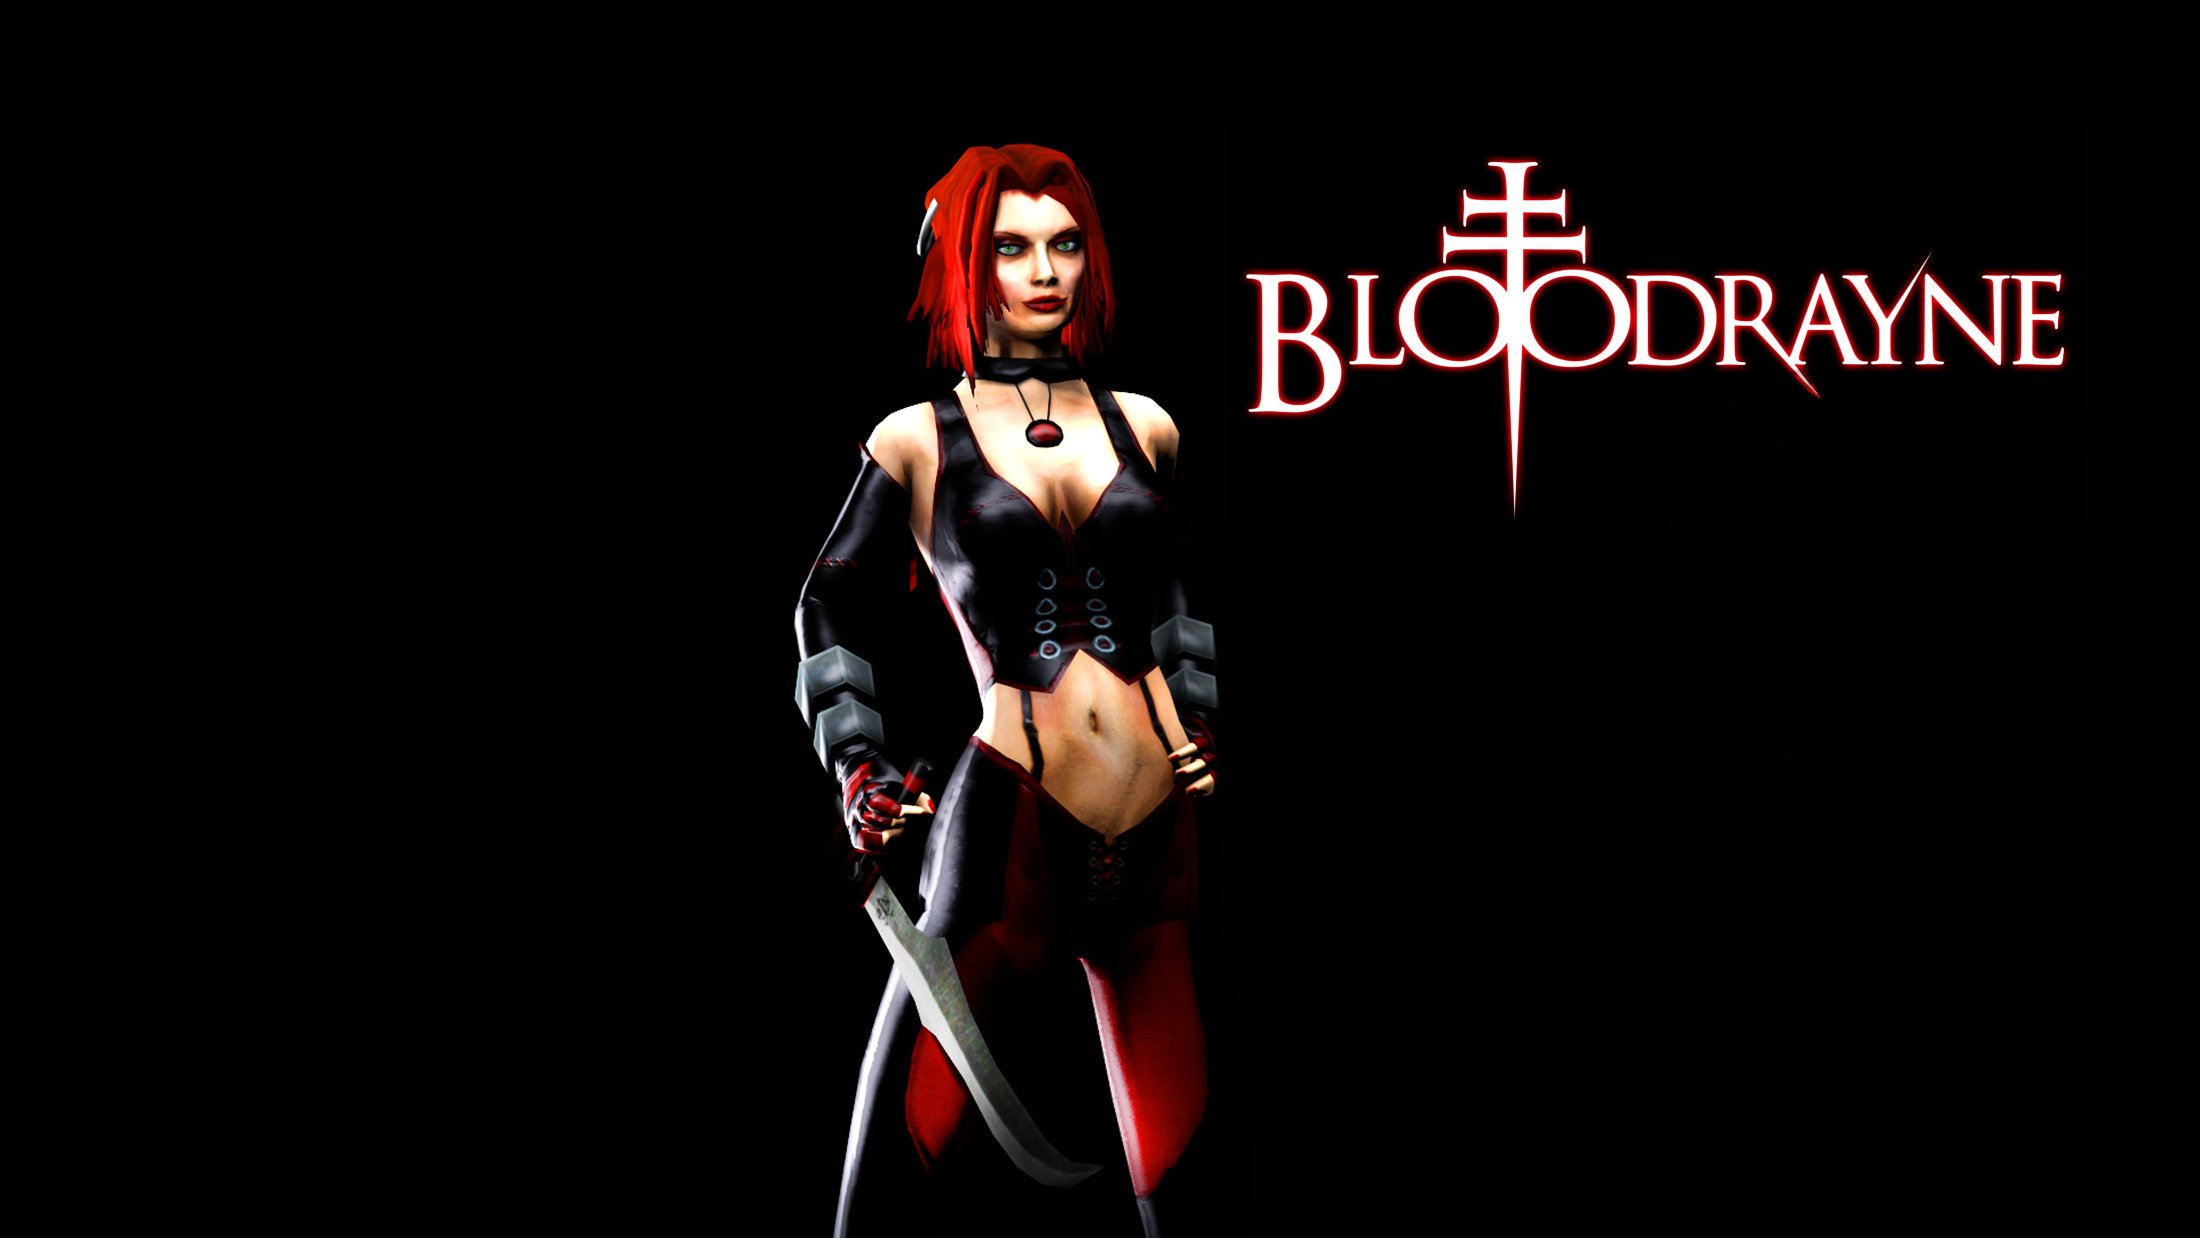 bloodrayne 2 movie free download